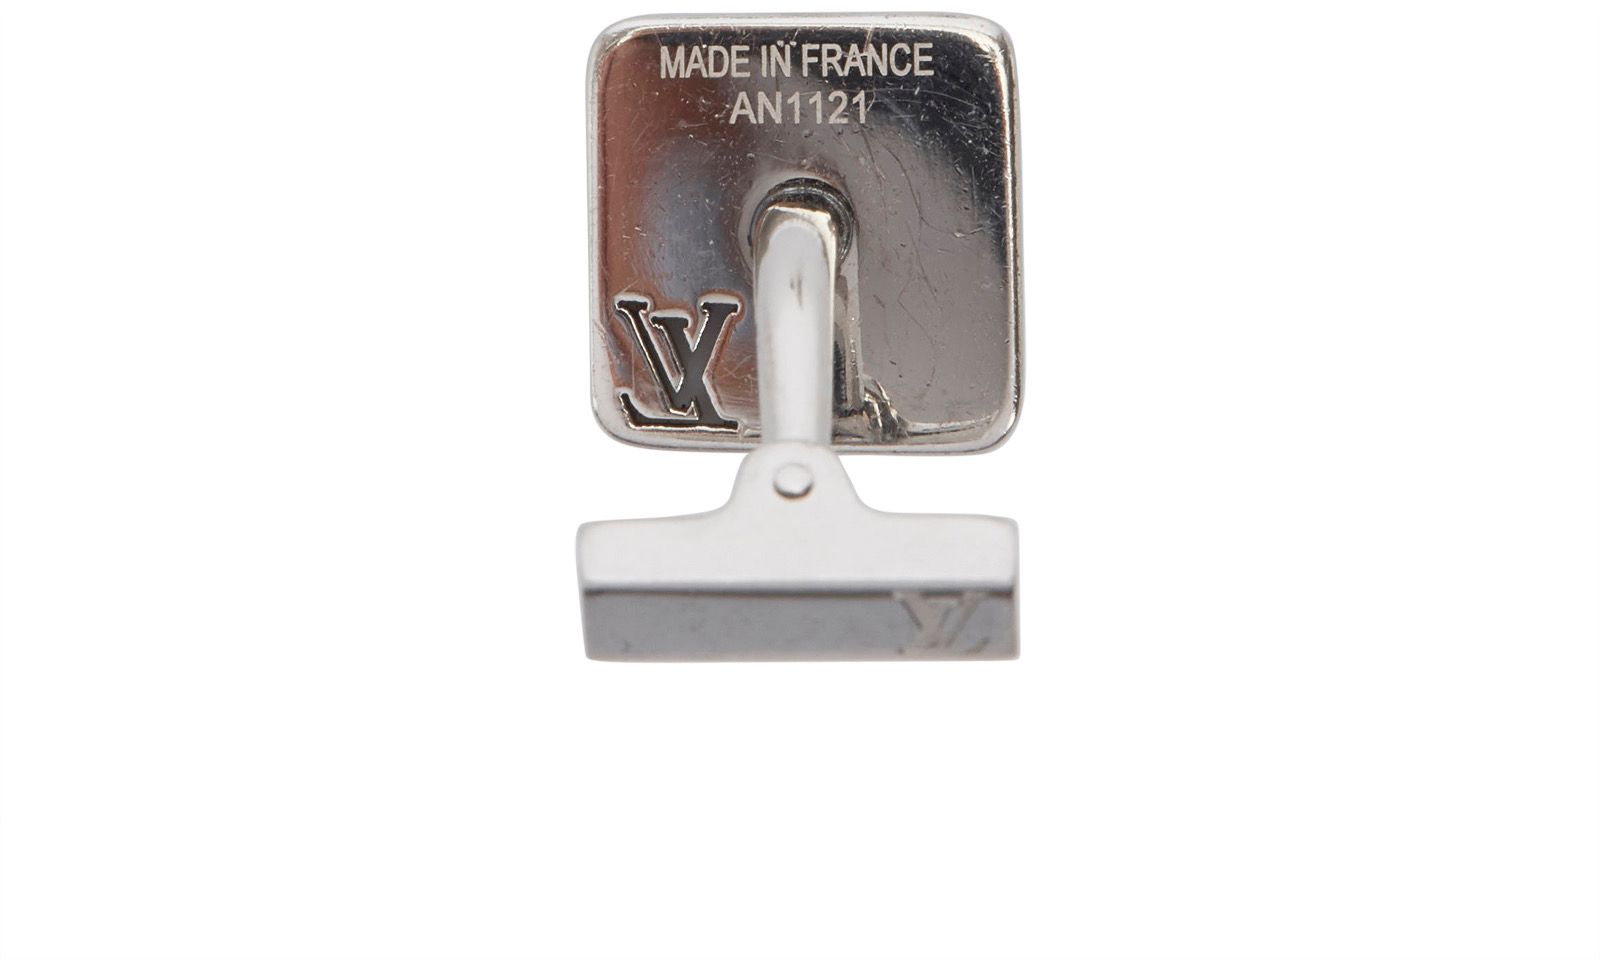 Sold at Auction: Louis Vuitton Cufflinks (w/box)